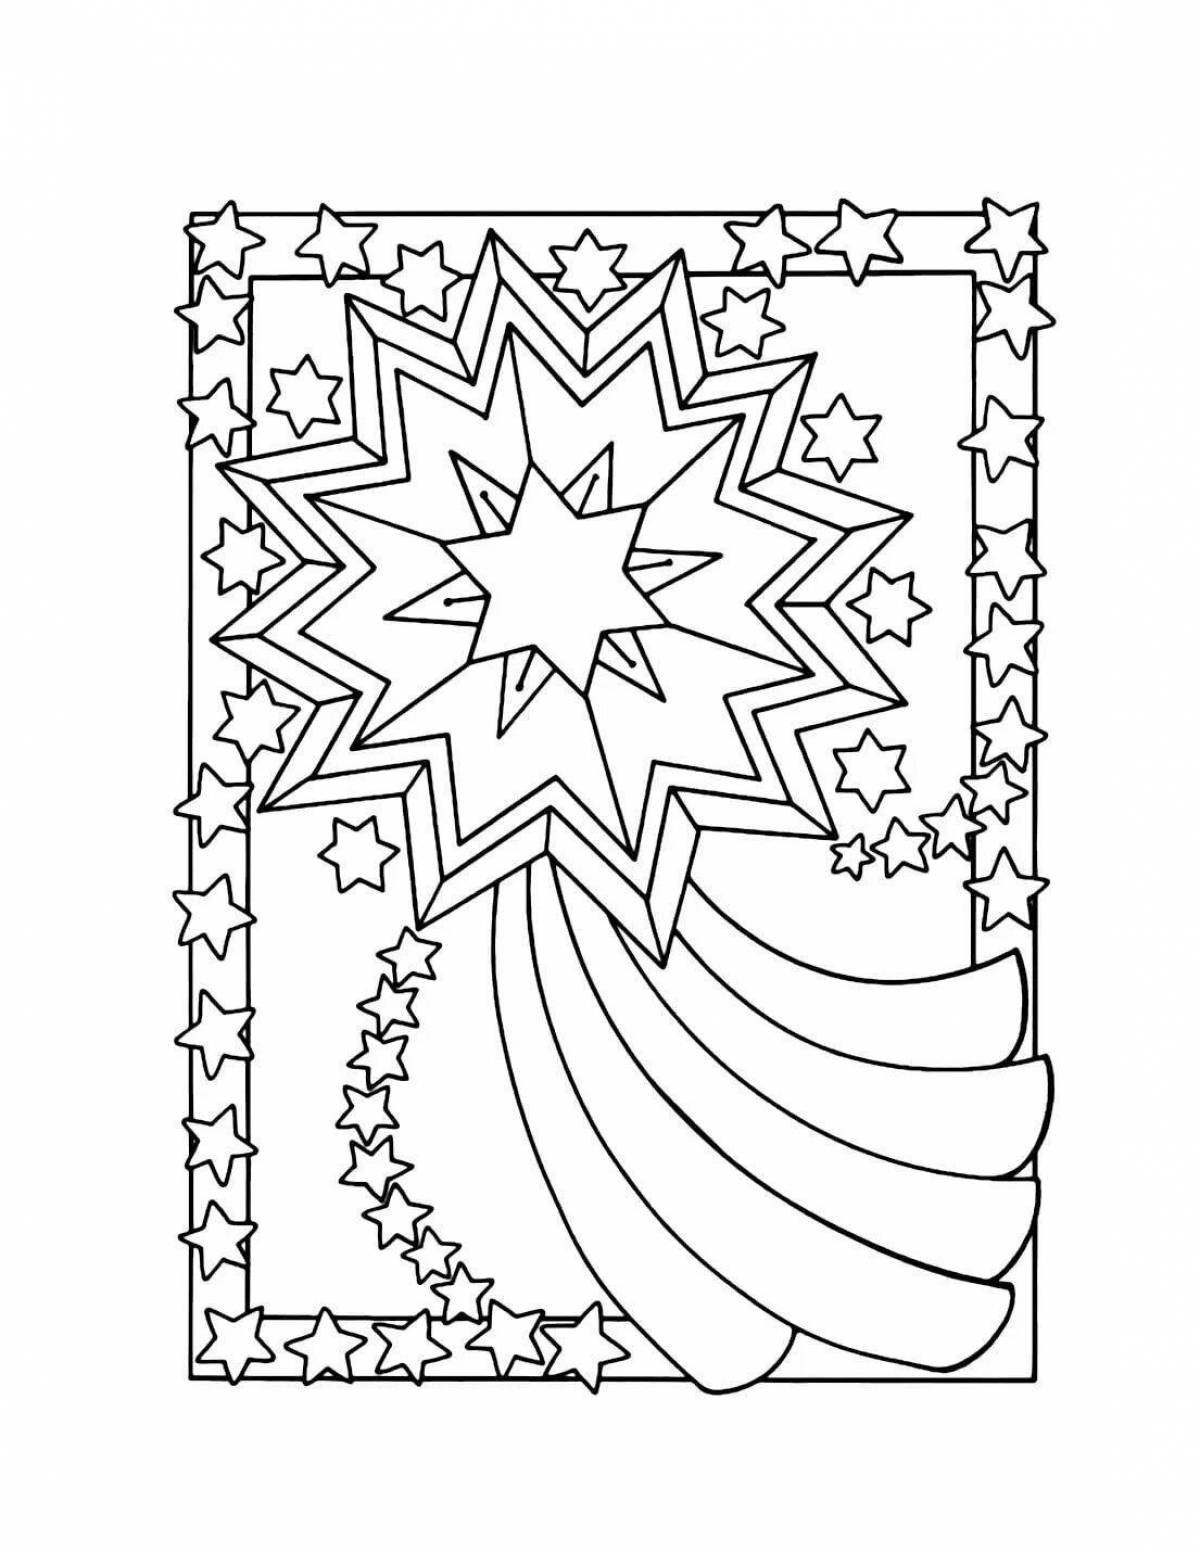 Joyful star of bethlehem coloring pages for kids